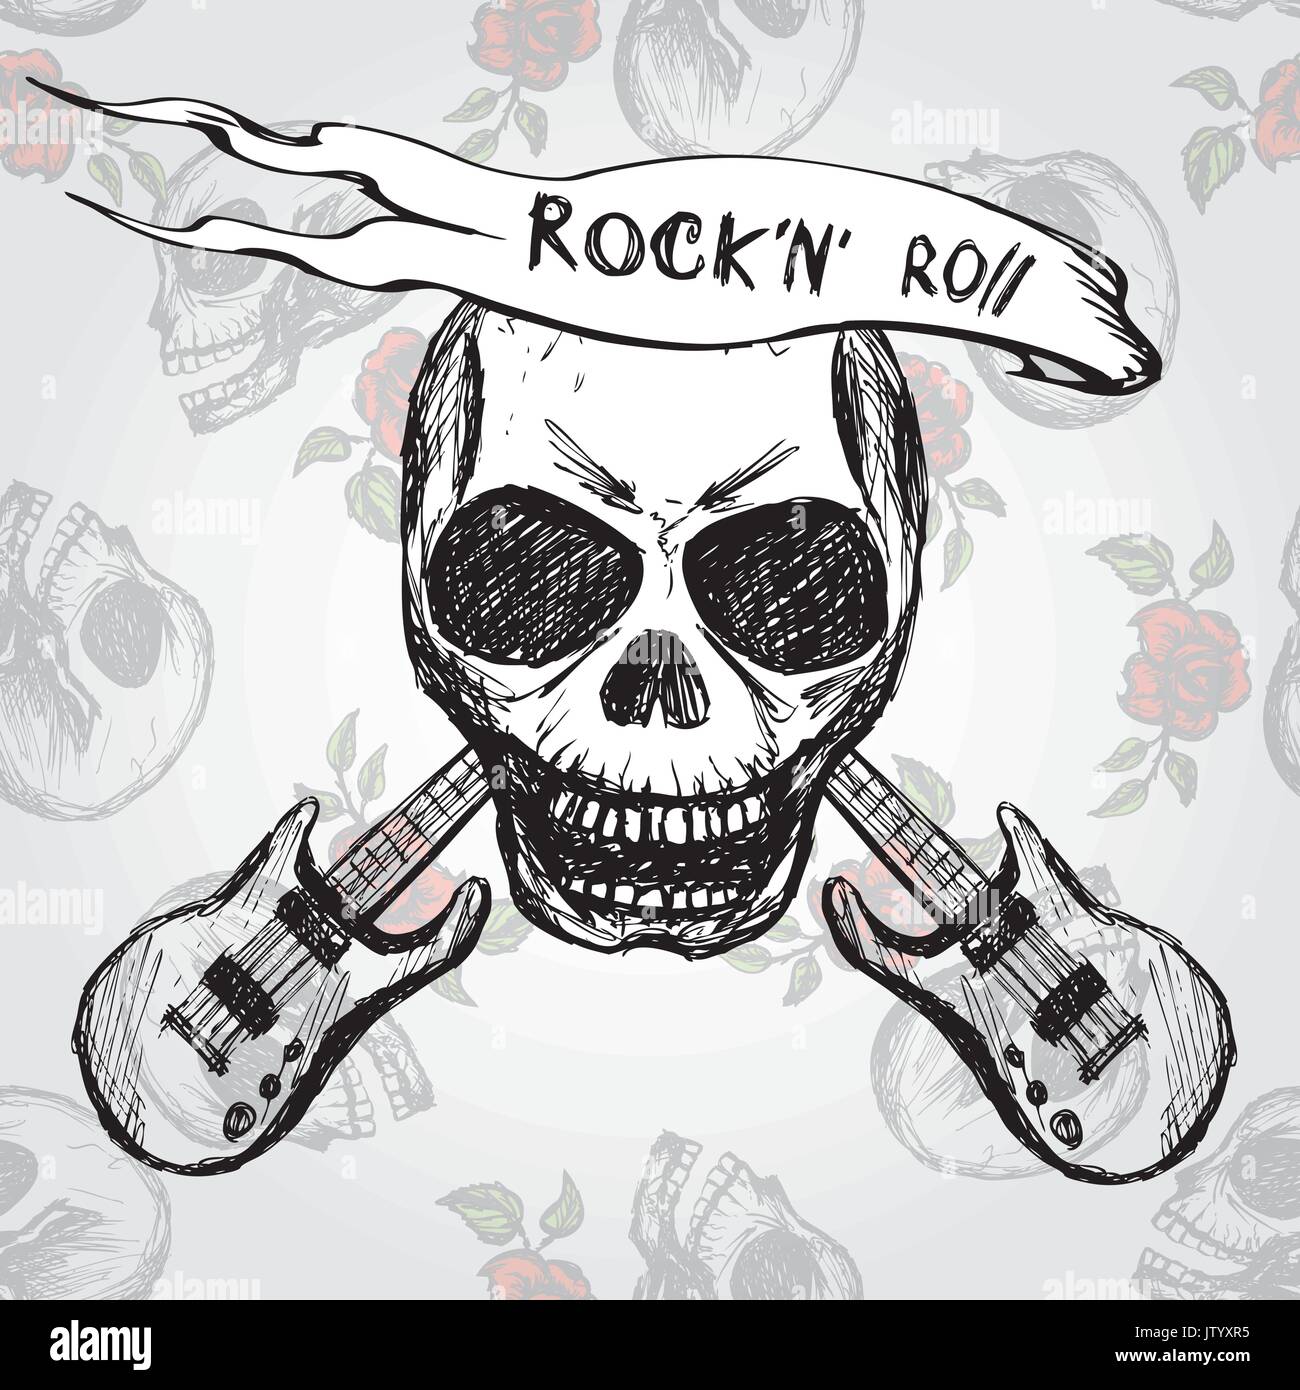 Skelette Rockband Skelett Und Gitarre Toter Mann Und Trommel Skelett  Stock-Vektorgrafik von ©popaukropa 650016782